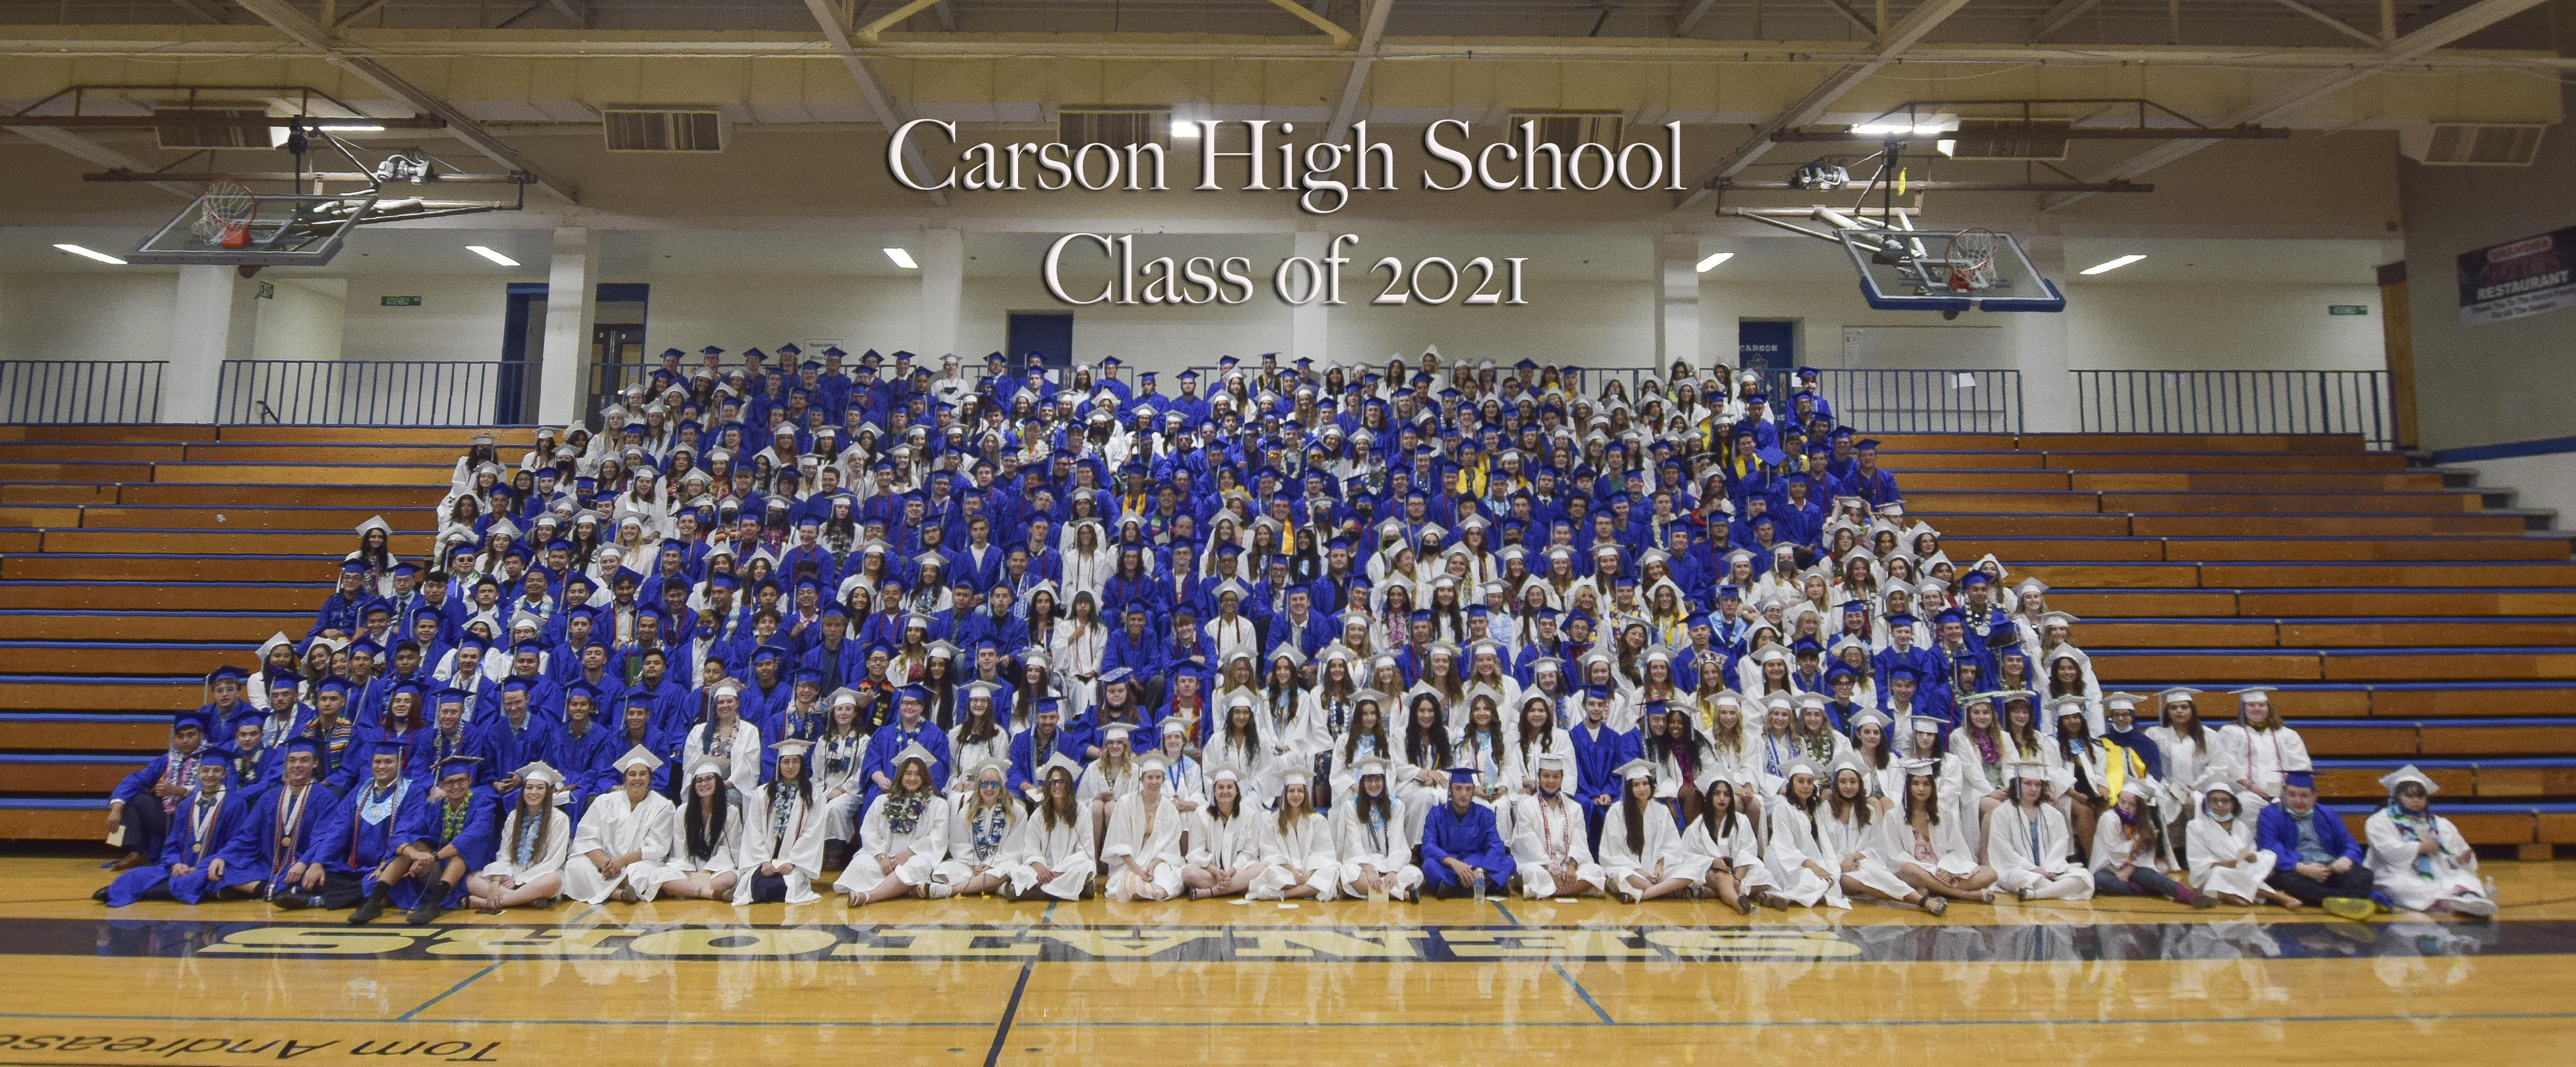 Carson High School Graduation Class Photo